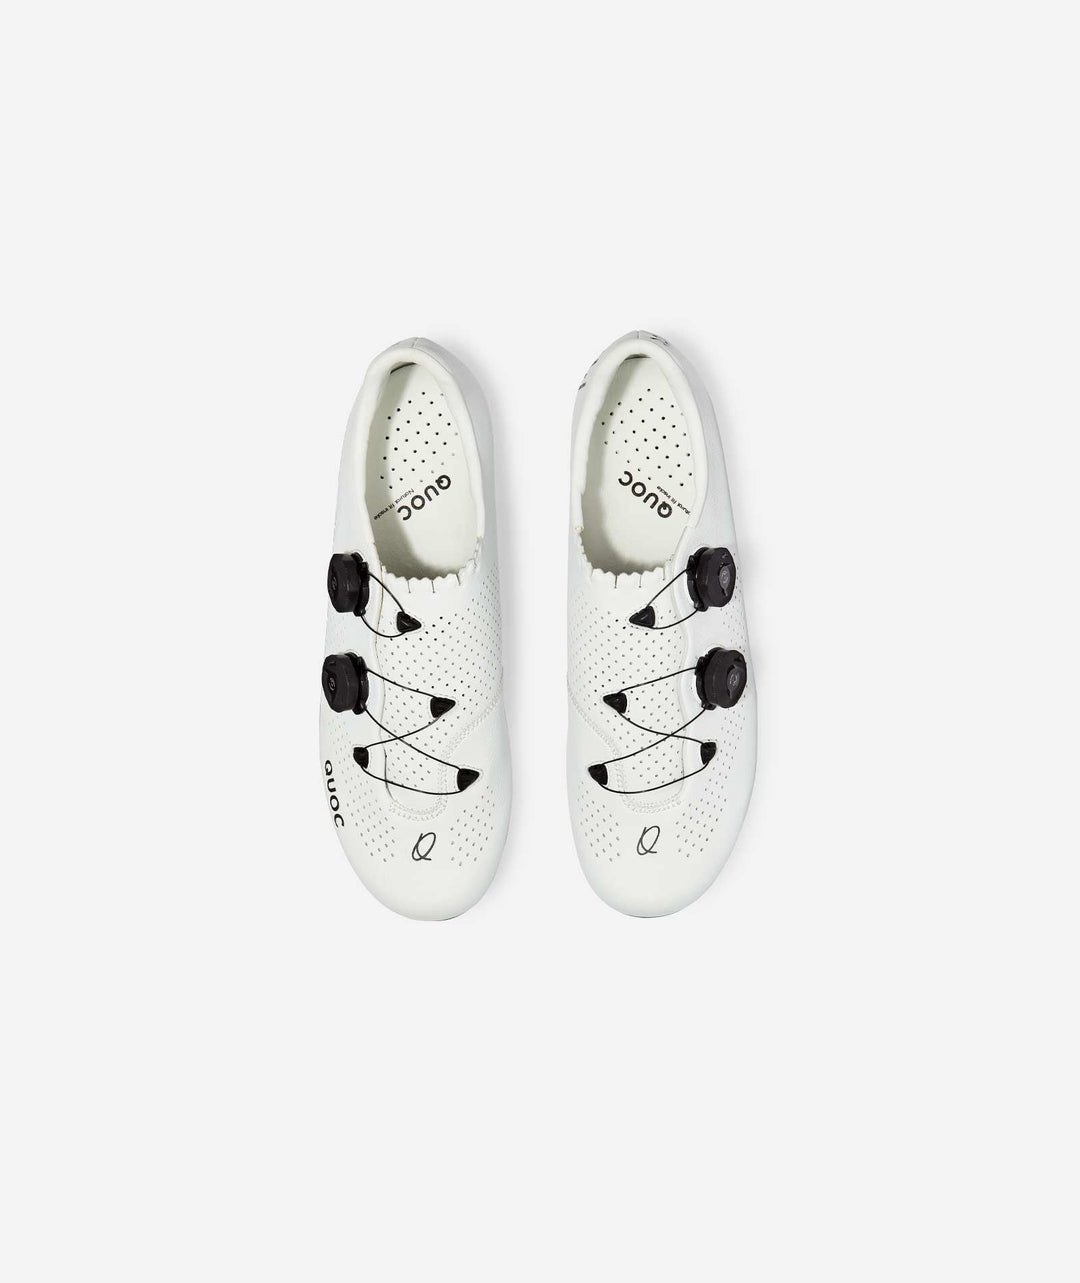 Quoc Mono II Road Shoes - White